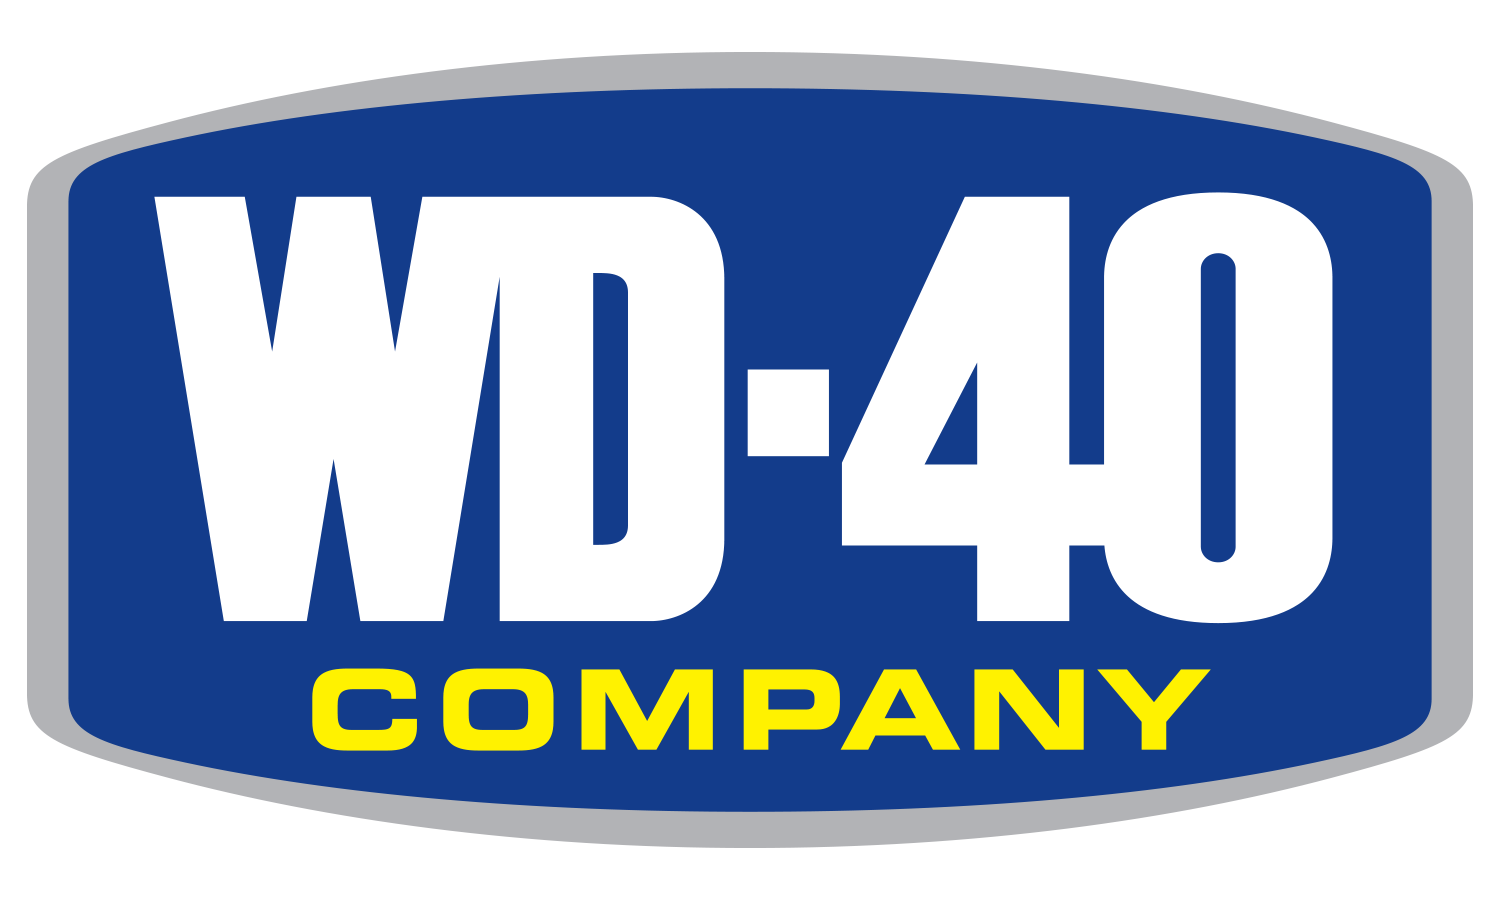 The WD-40 Company